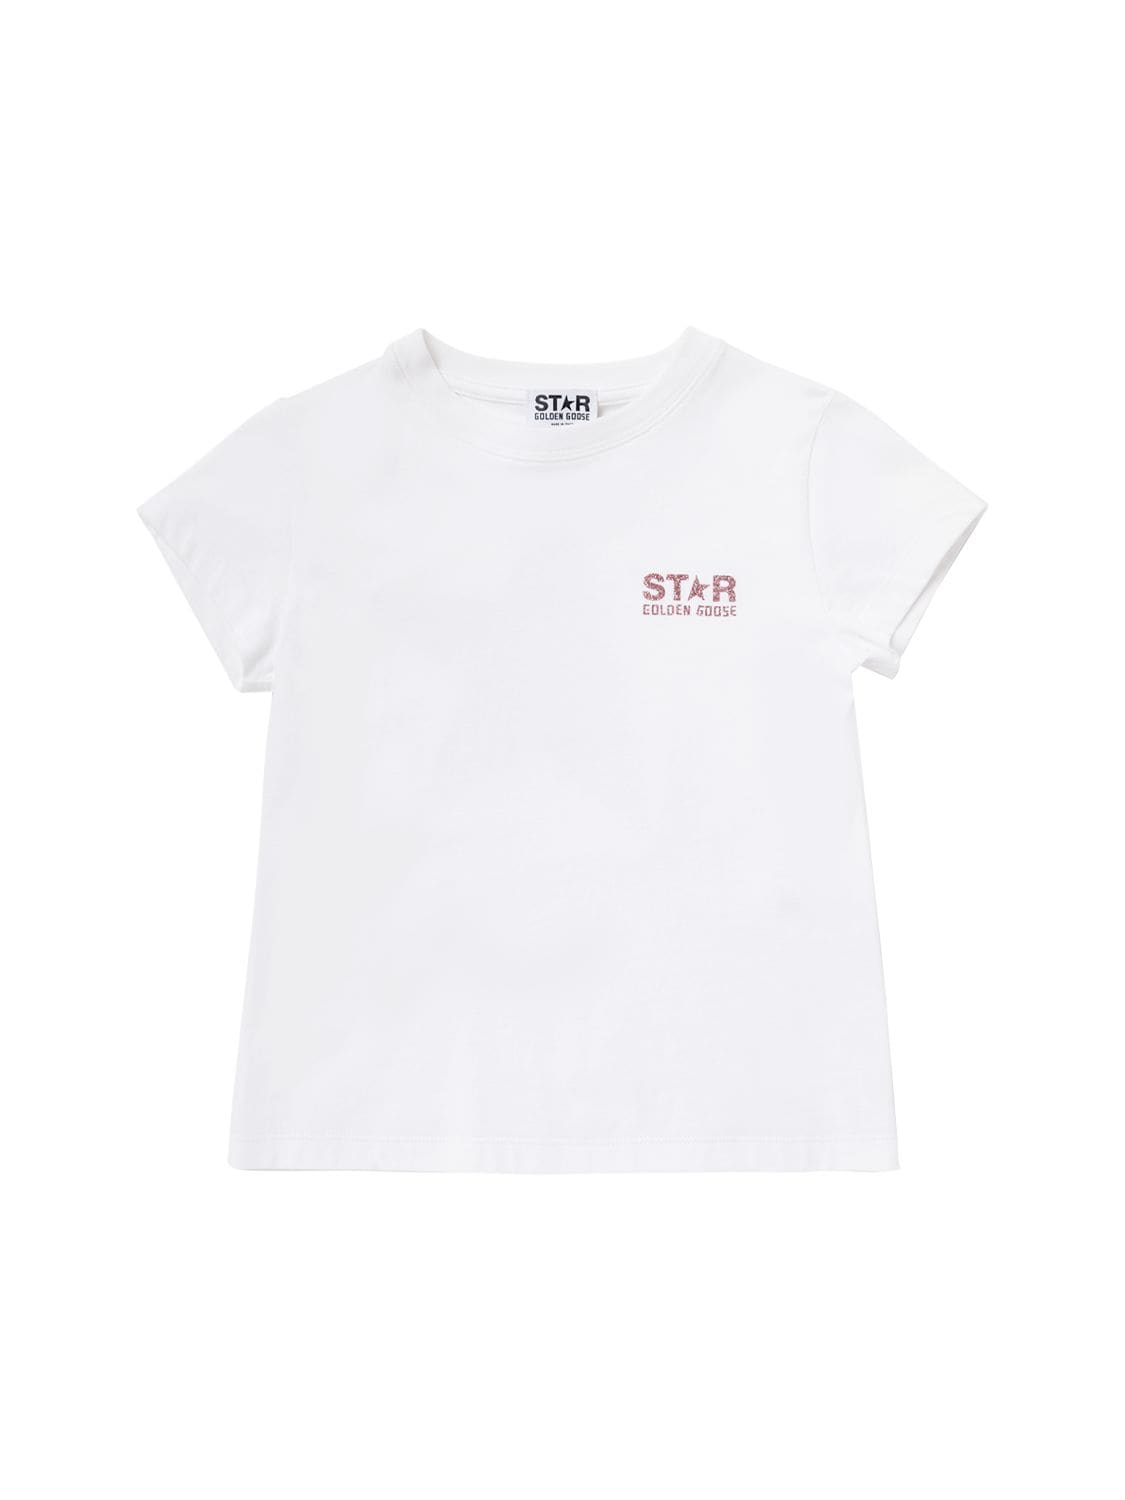 Shop Golden Goose Big Star Cotton Jersey T-shirt In White,pink